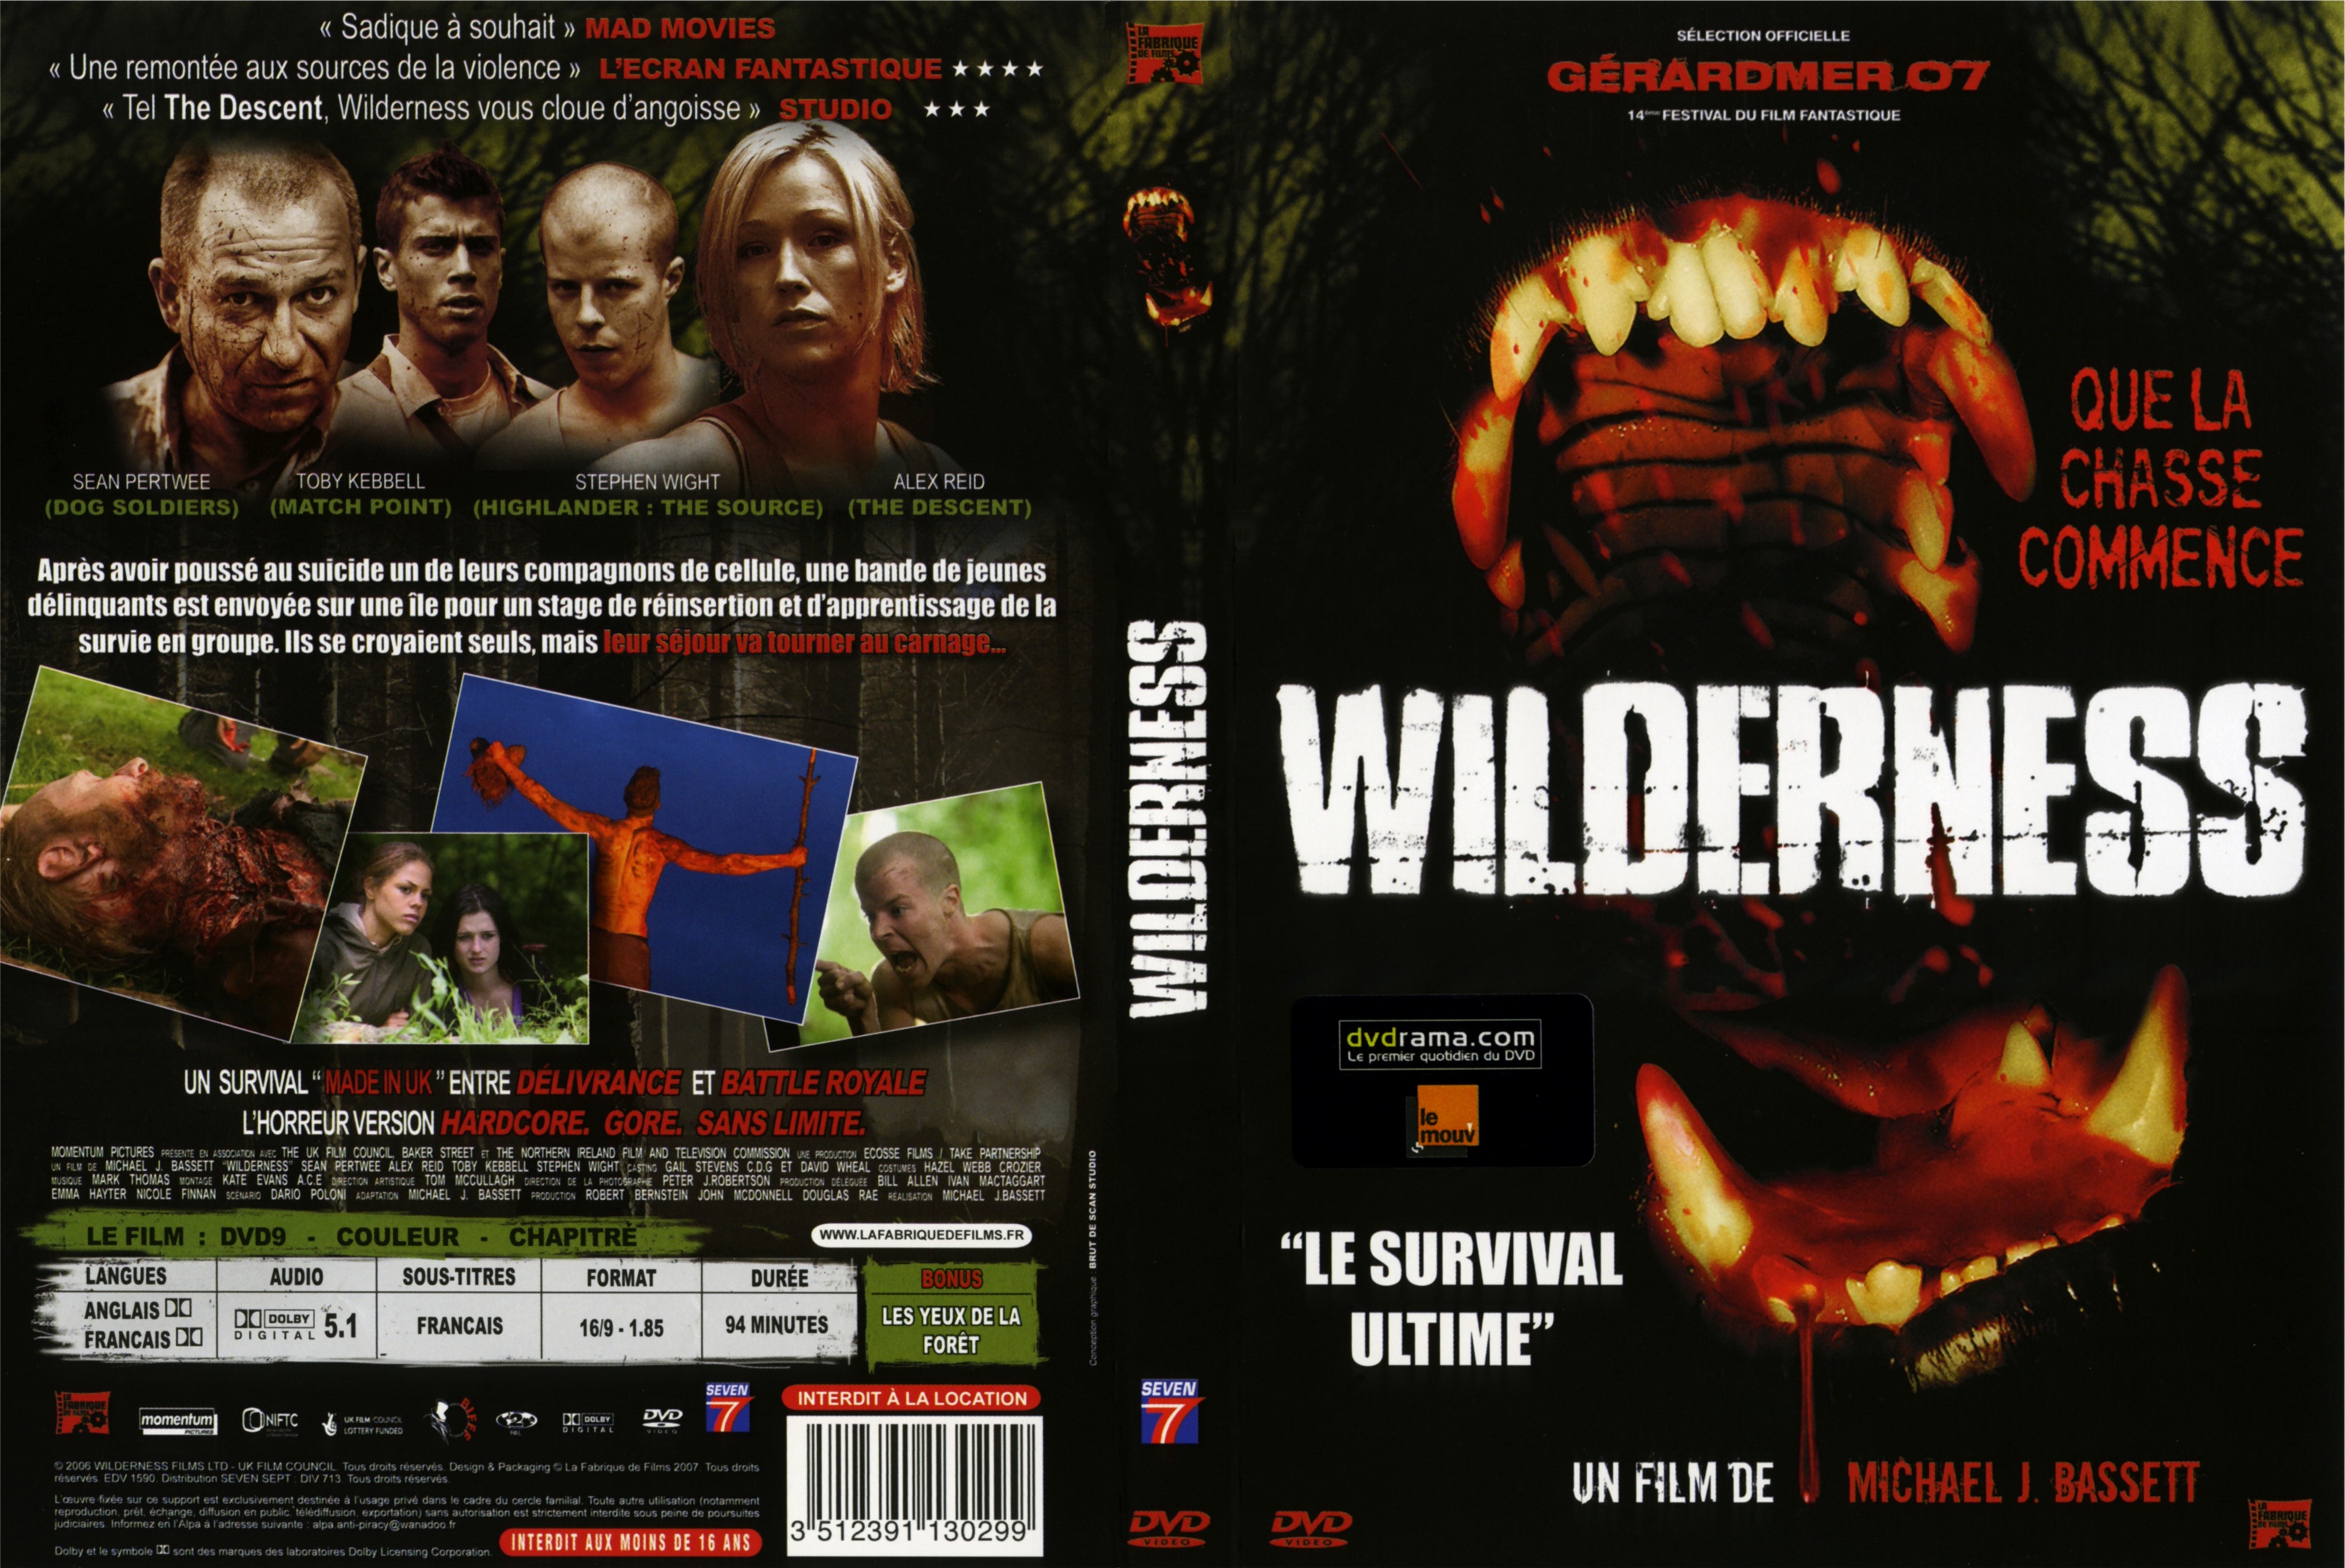 Jaquette DVD Wilderness